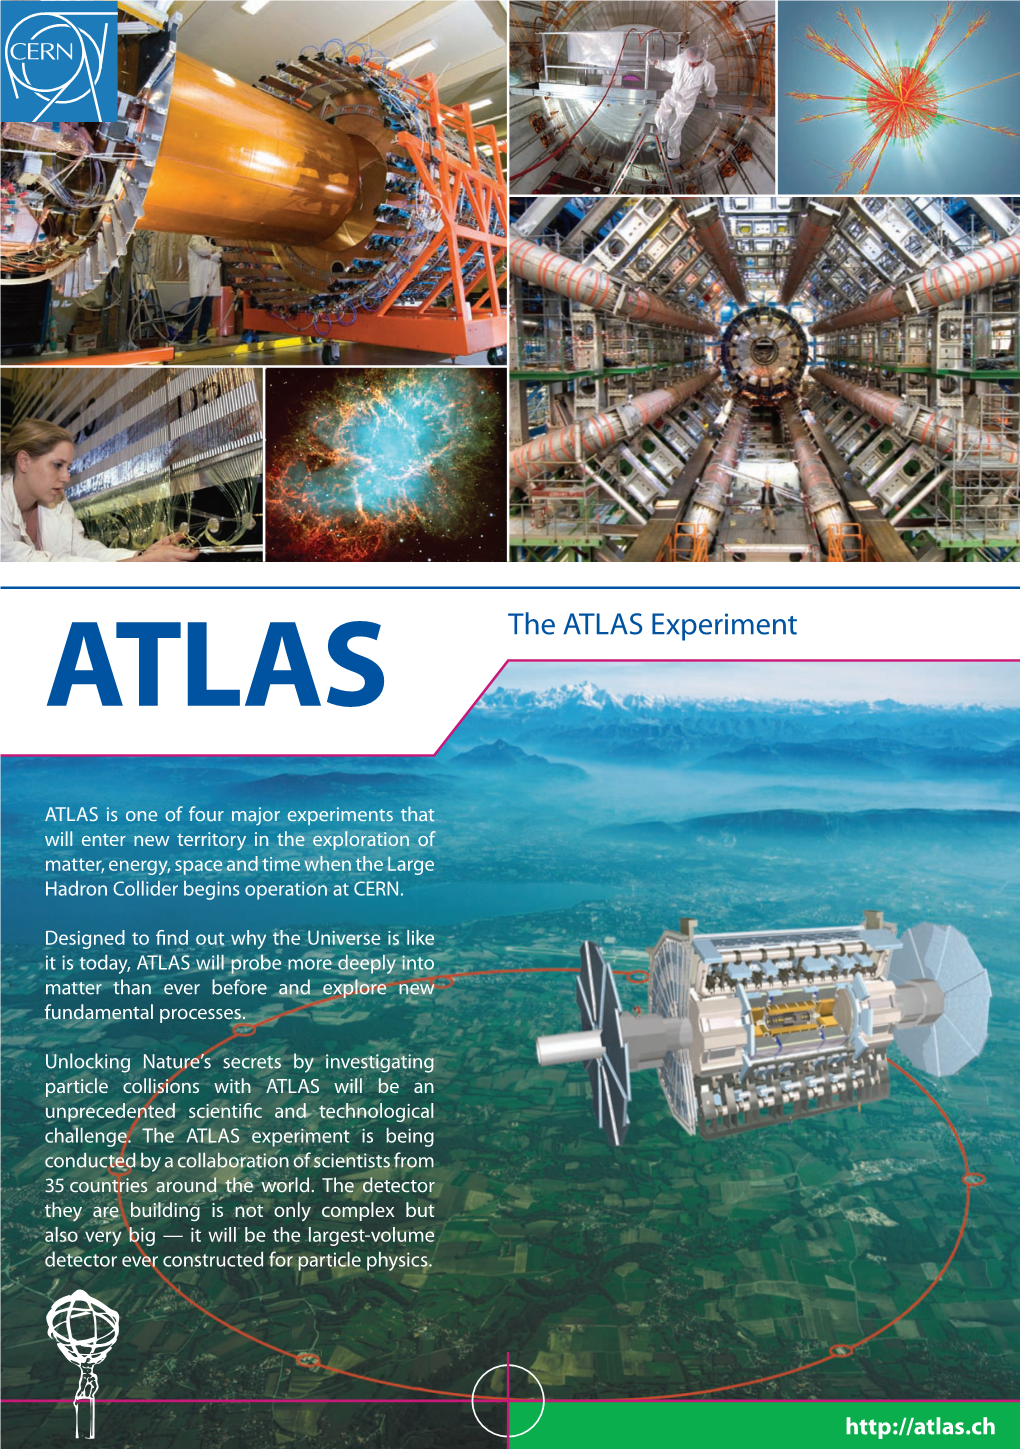 ATLAS the ATLAS Experiment